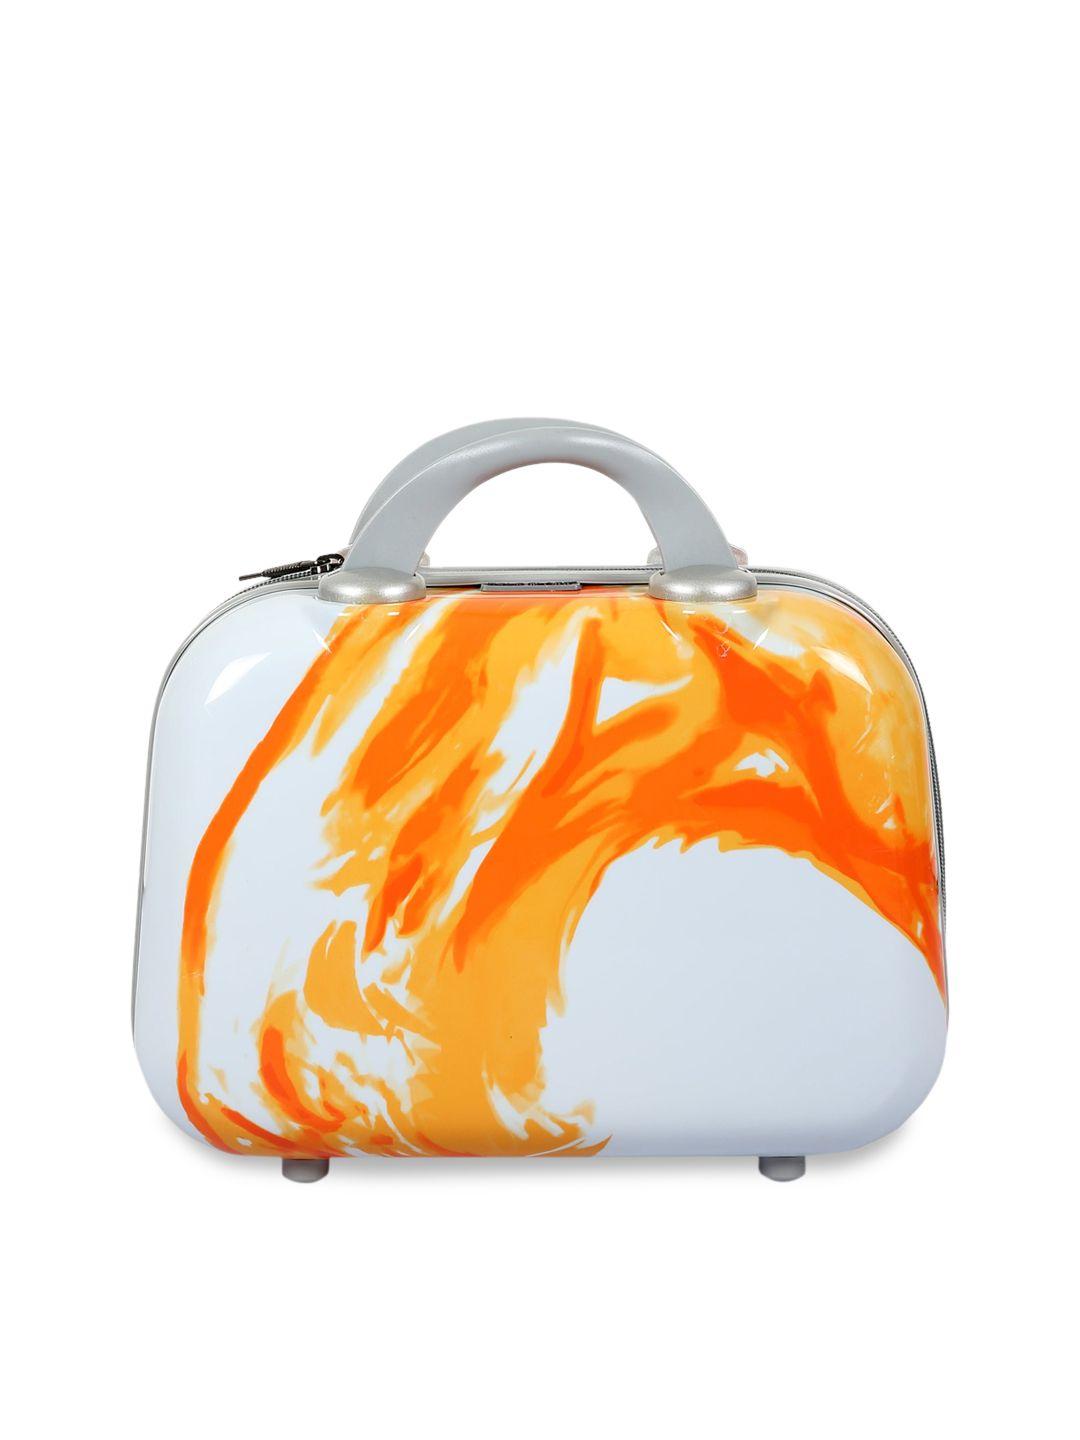 polo class orange & white printed small travel vanity bag